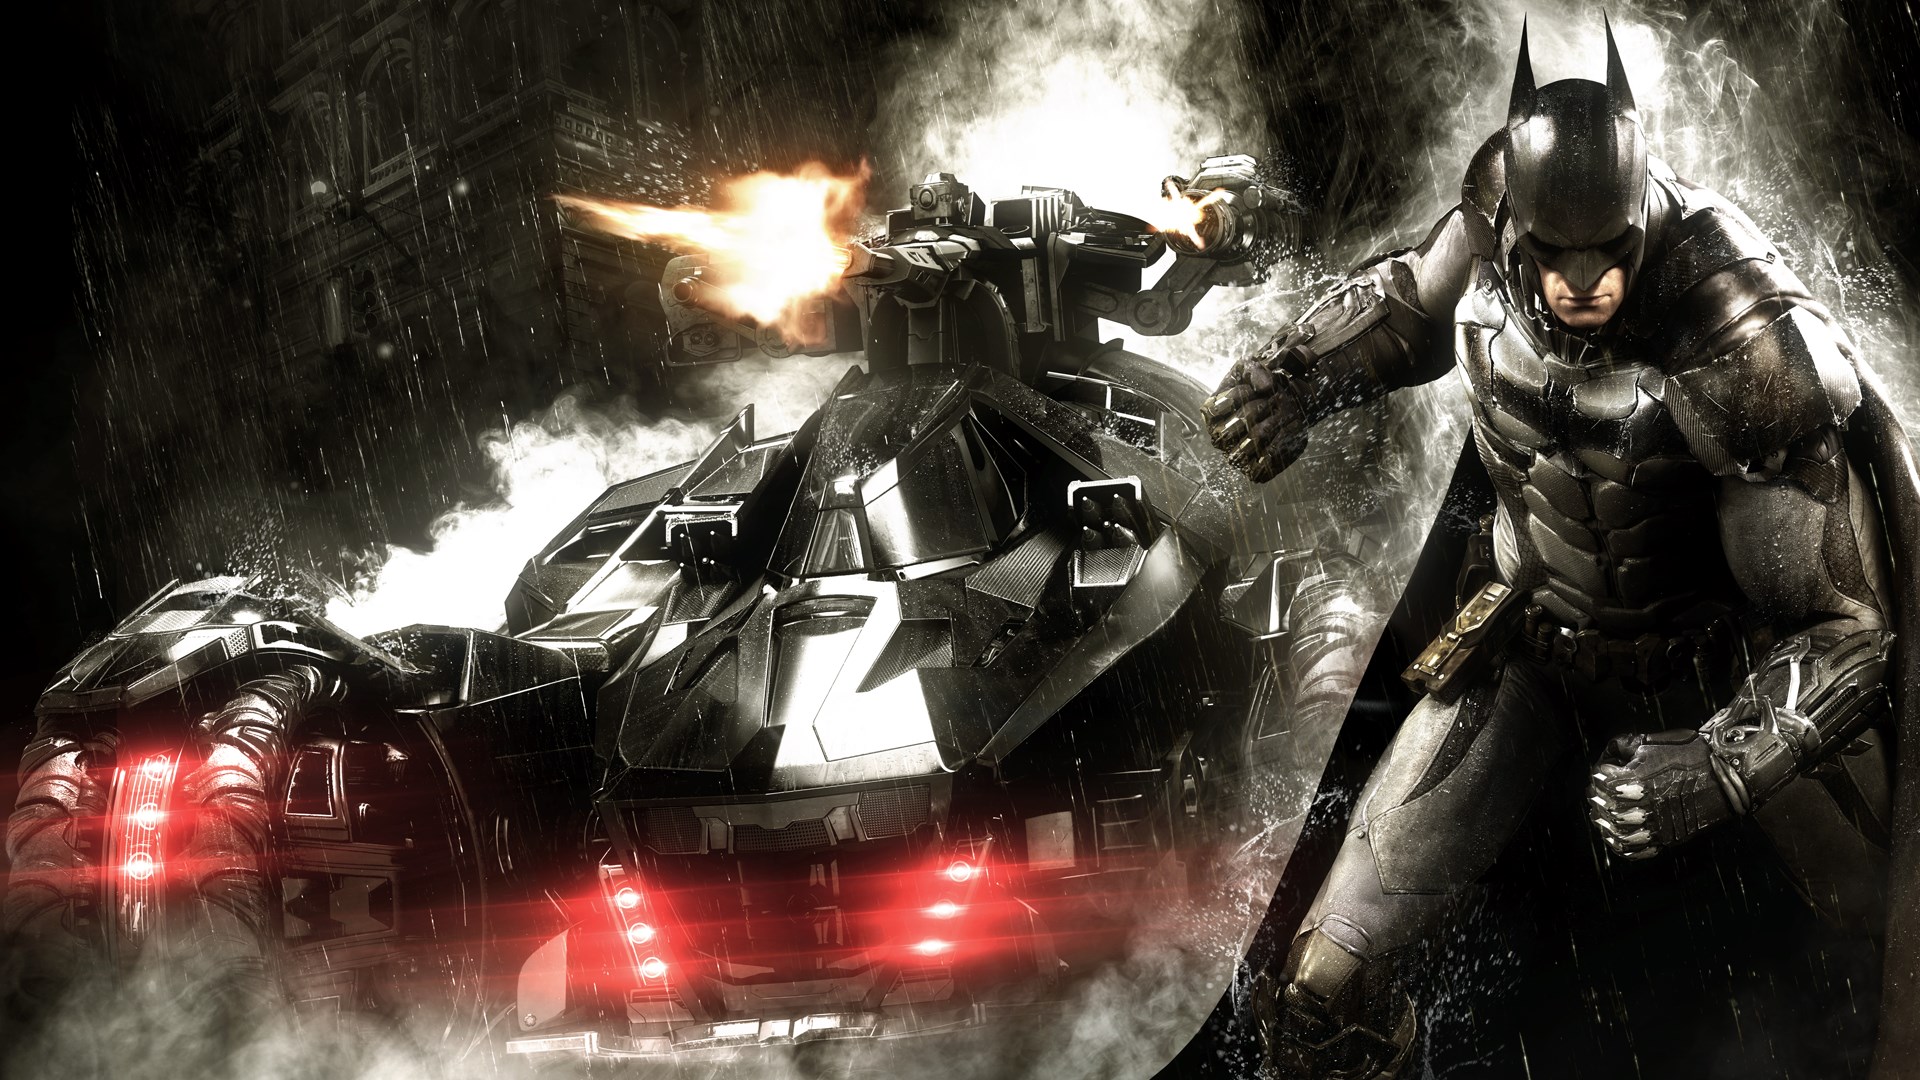 Batman™: Arkham Knight - Harley Quinn Story Pack on Steam